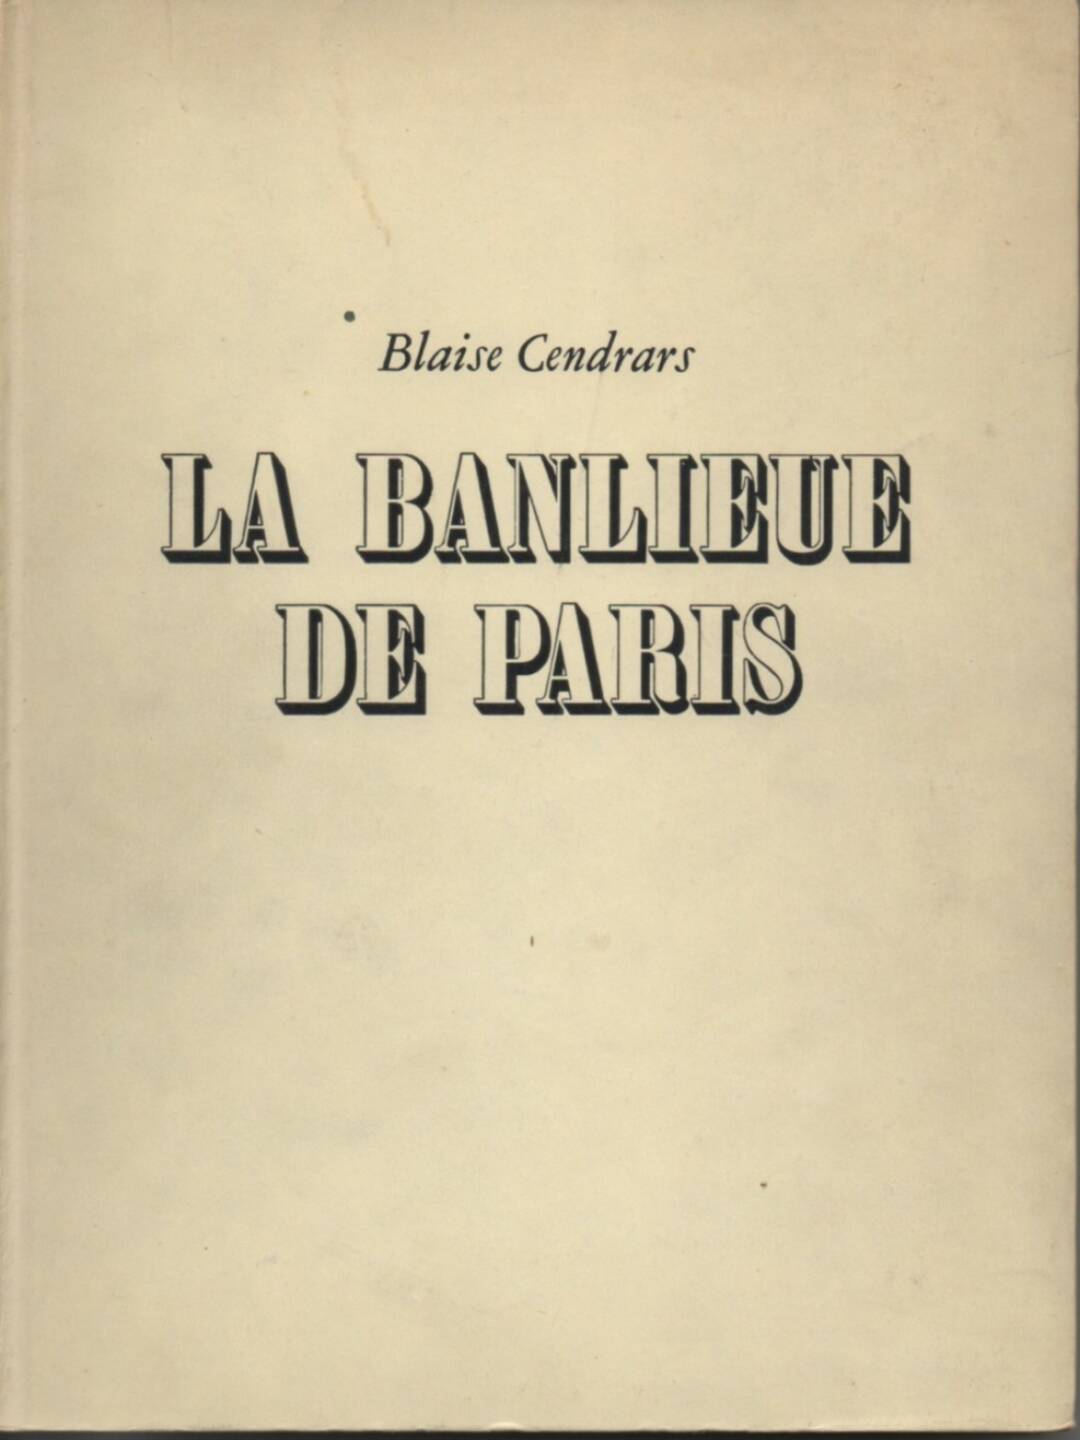 Robert Doisneau and Blaise Cendrars - La banlieue de Paris, 200-350 Euro, http://josefchladek.com/book/blaise_doisneau_cendrars_-_la_banlieue_de_paris